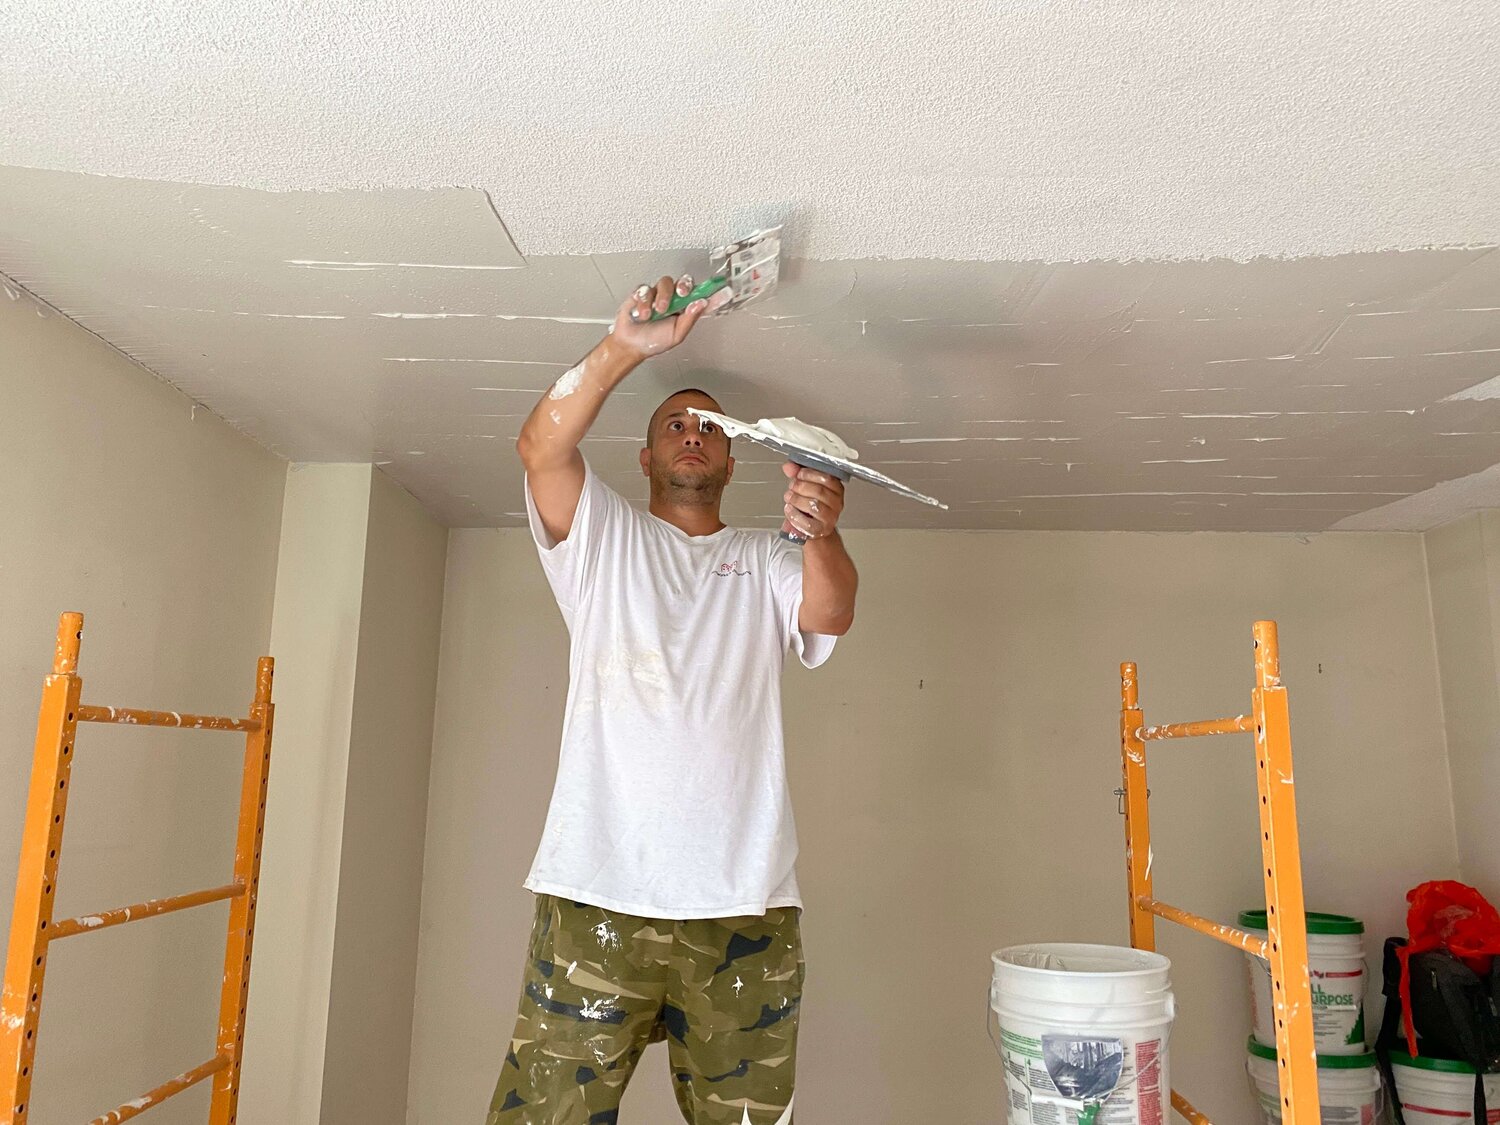 Ceiling Replaster Blog Paintworks, Skim Coat Plaster Ceiling Repair